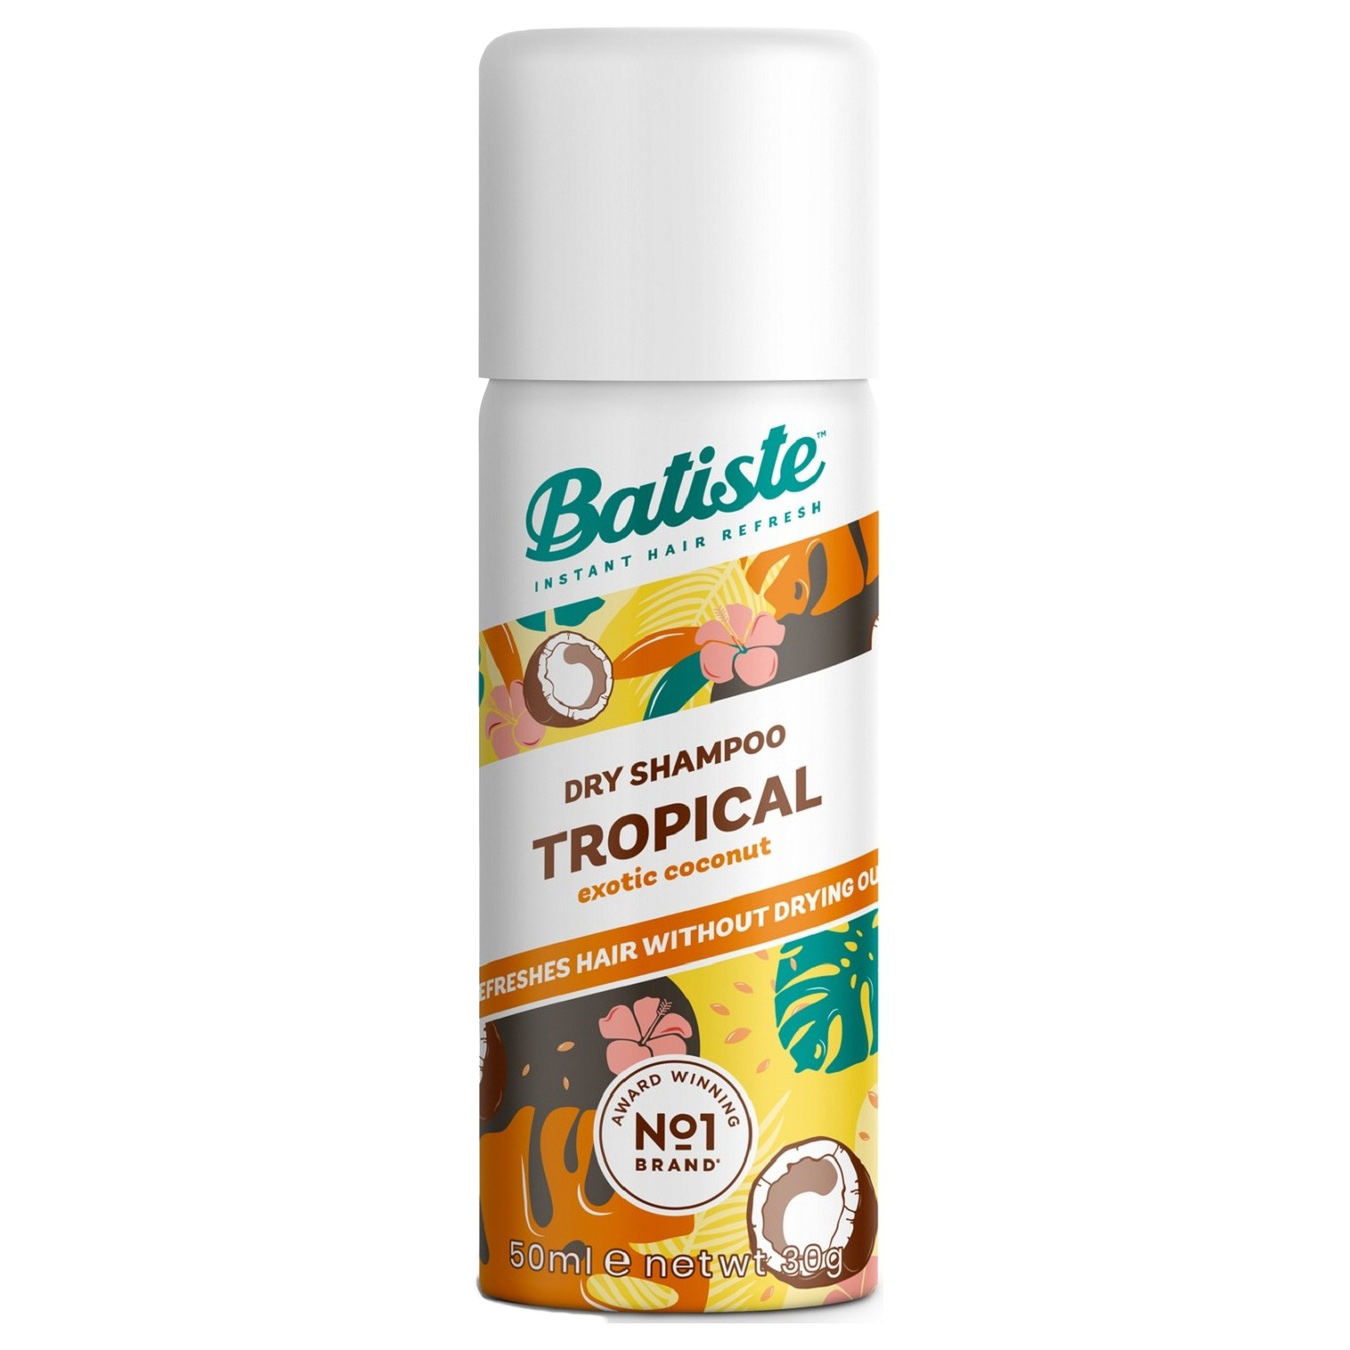 Batiste Tropical dry shampoo 50ml